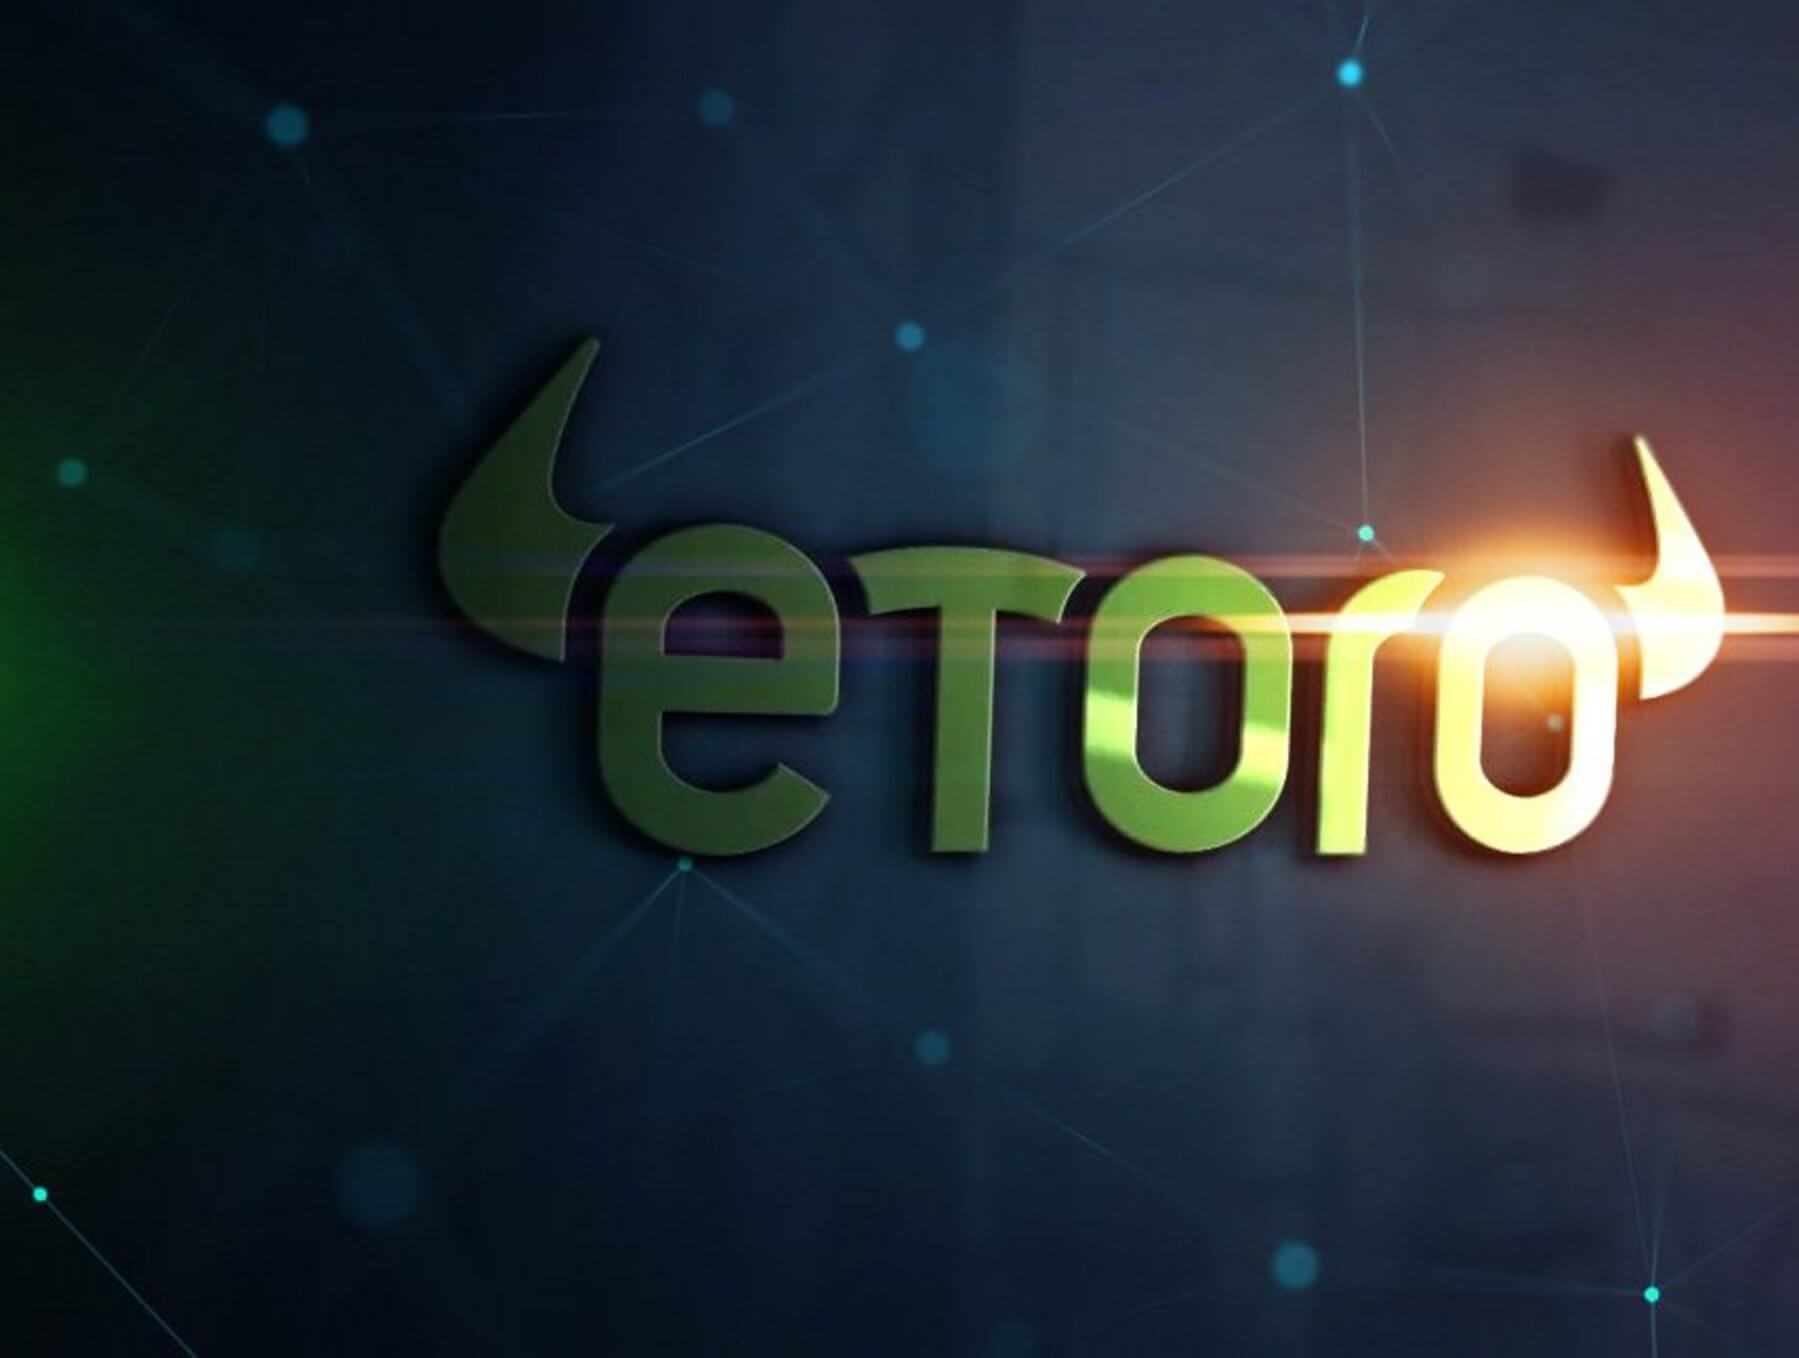 Most recent news about Etoro Application - Best Financial App 2022